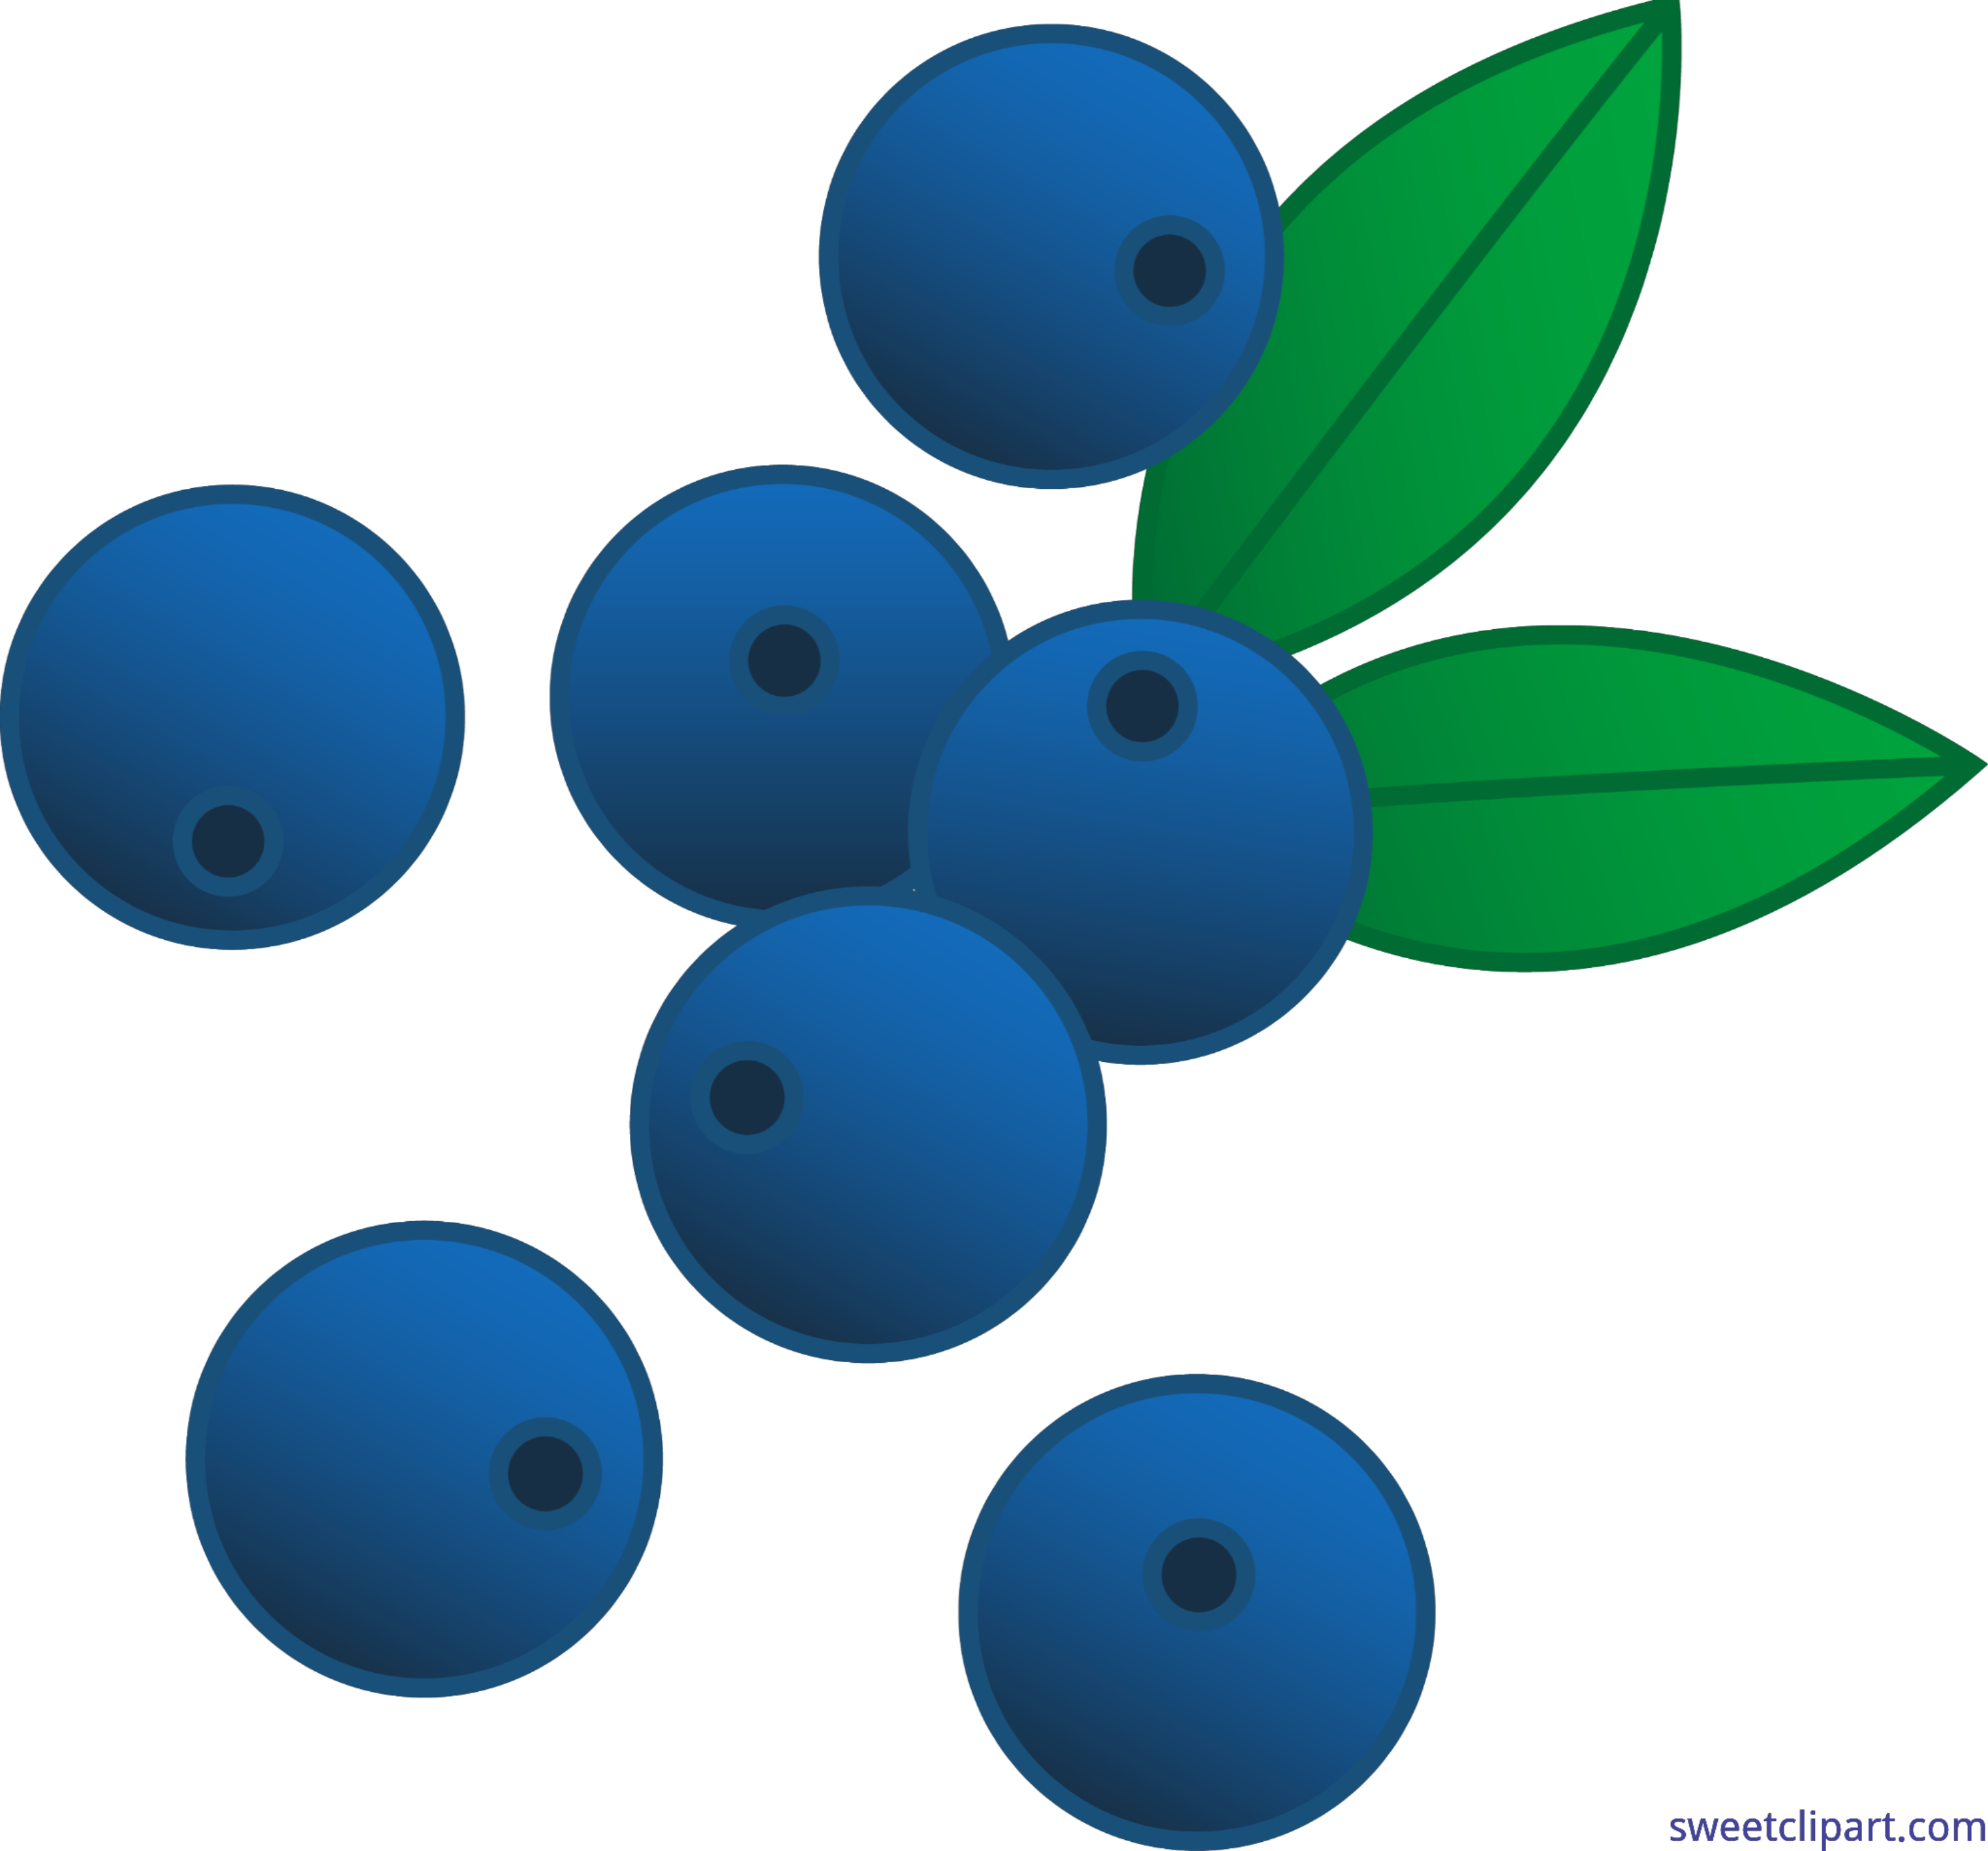 Berries blue berry